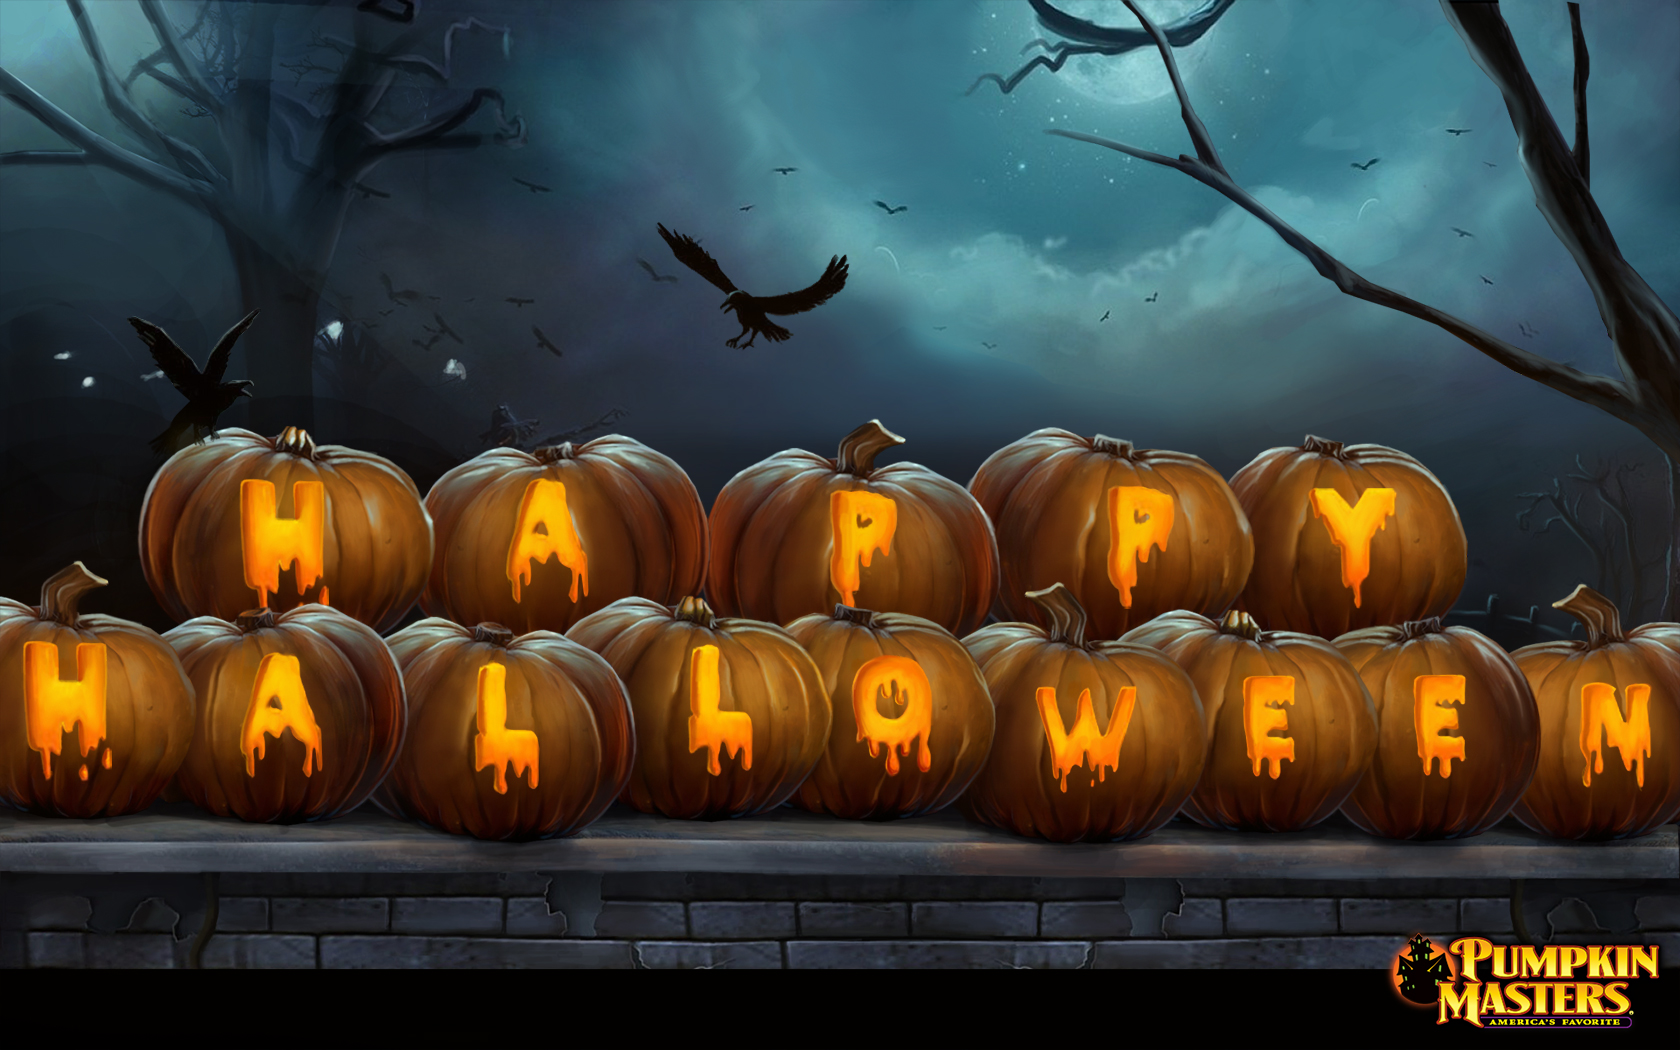 Desktop Wallpaper Halloween Carving Designs Pumpkin Masters